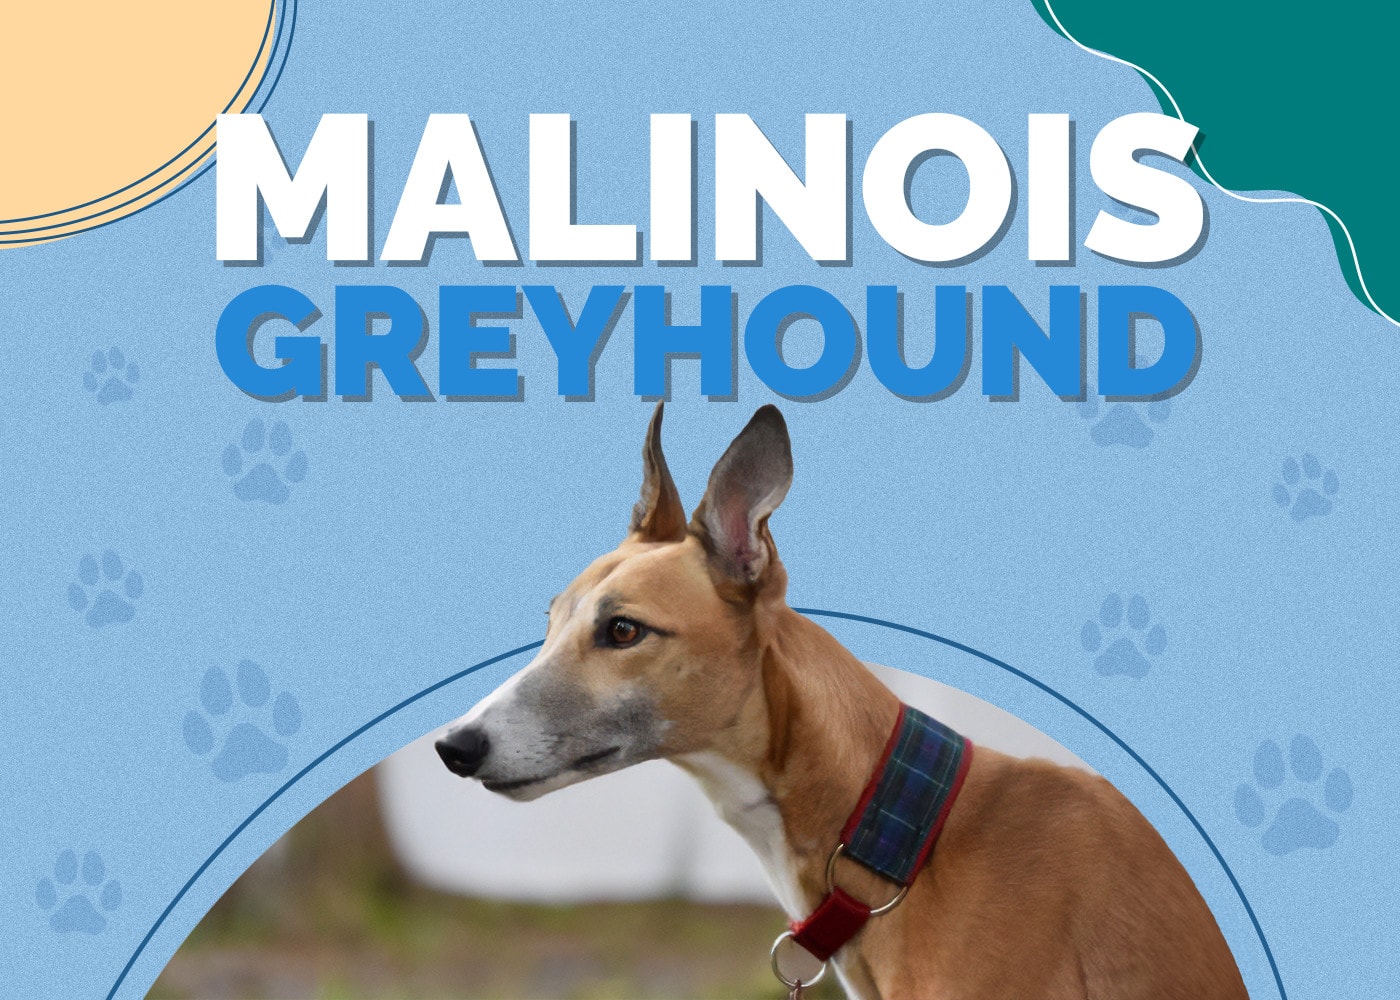 Malinois Greyhound (Belgian Malinois & Greyhound Mix)